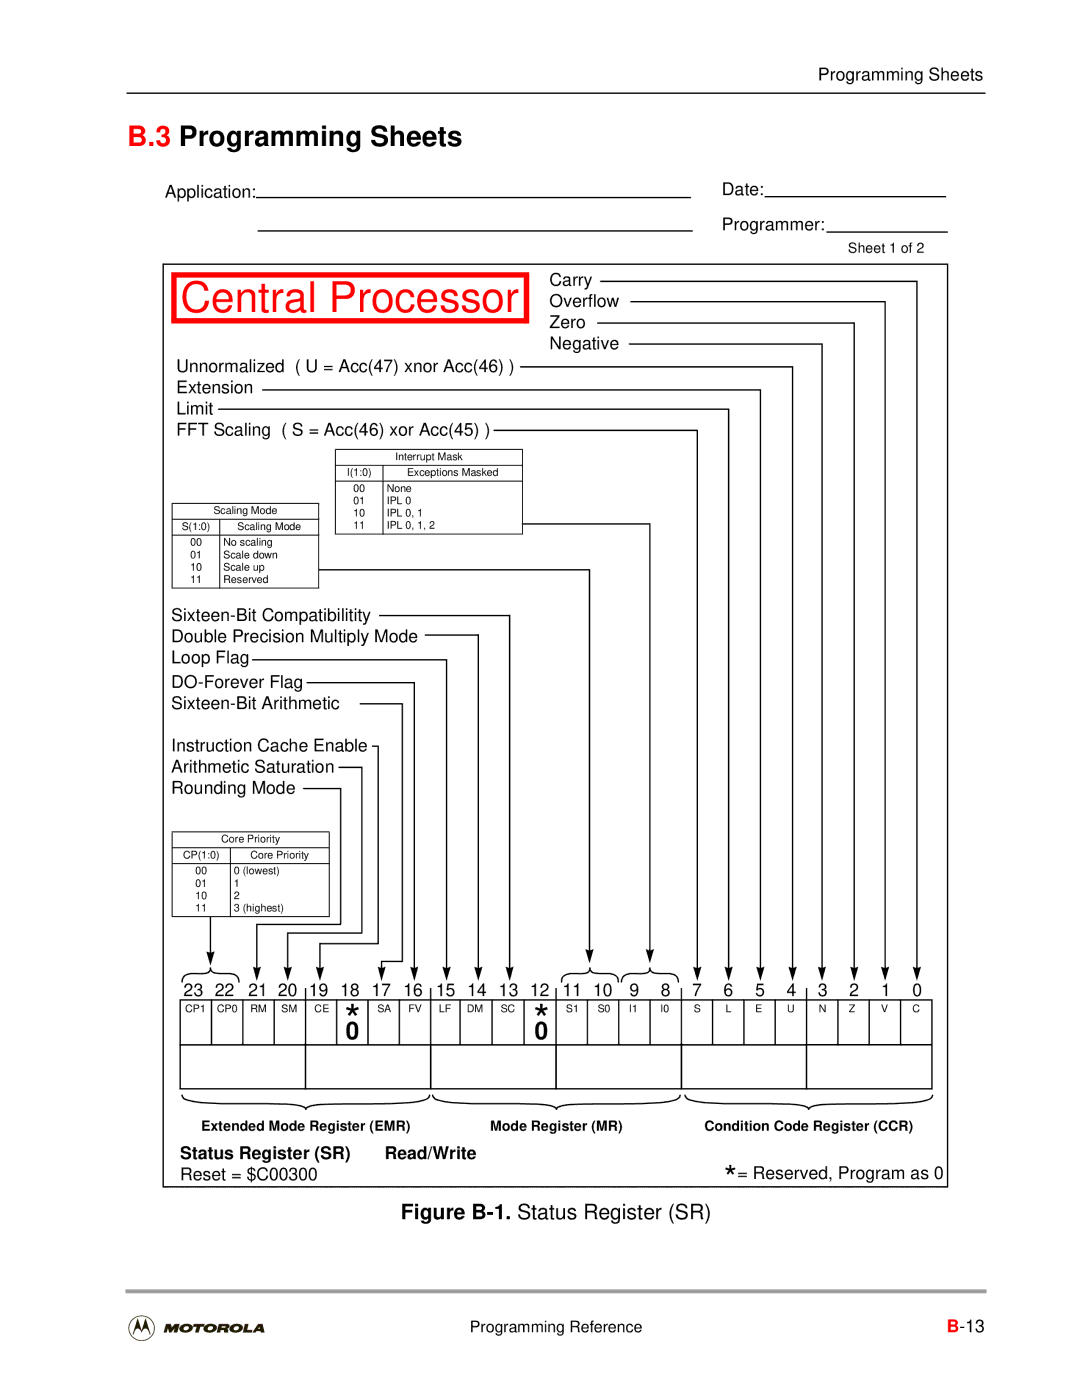 Motorola DSP56301 user manual Programming Sheets, Figure B-1.Status Register SR 